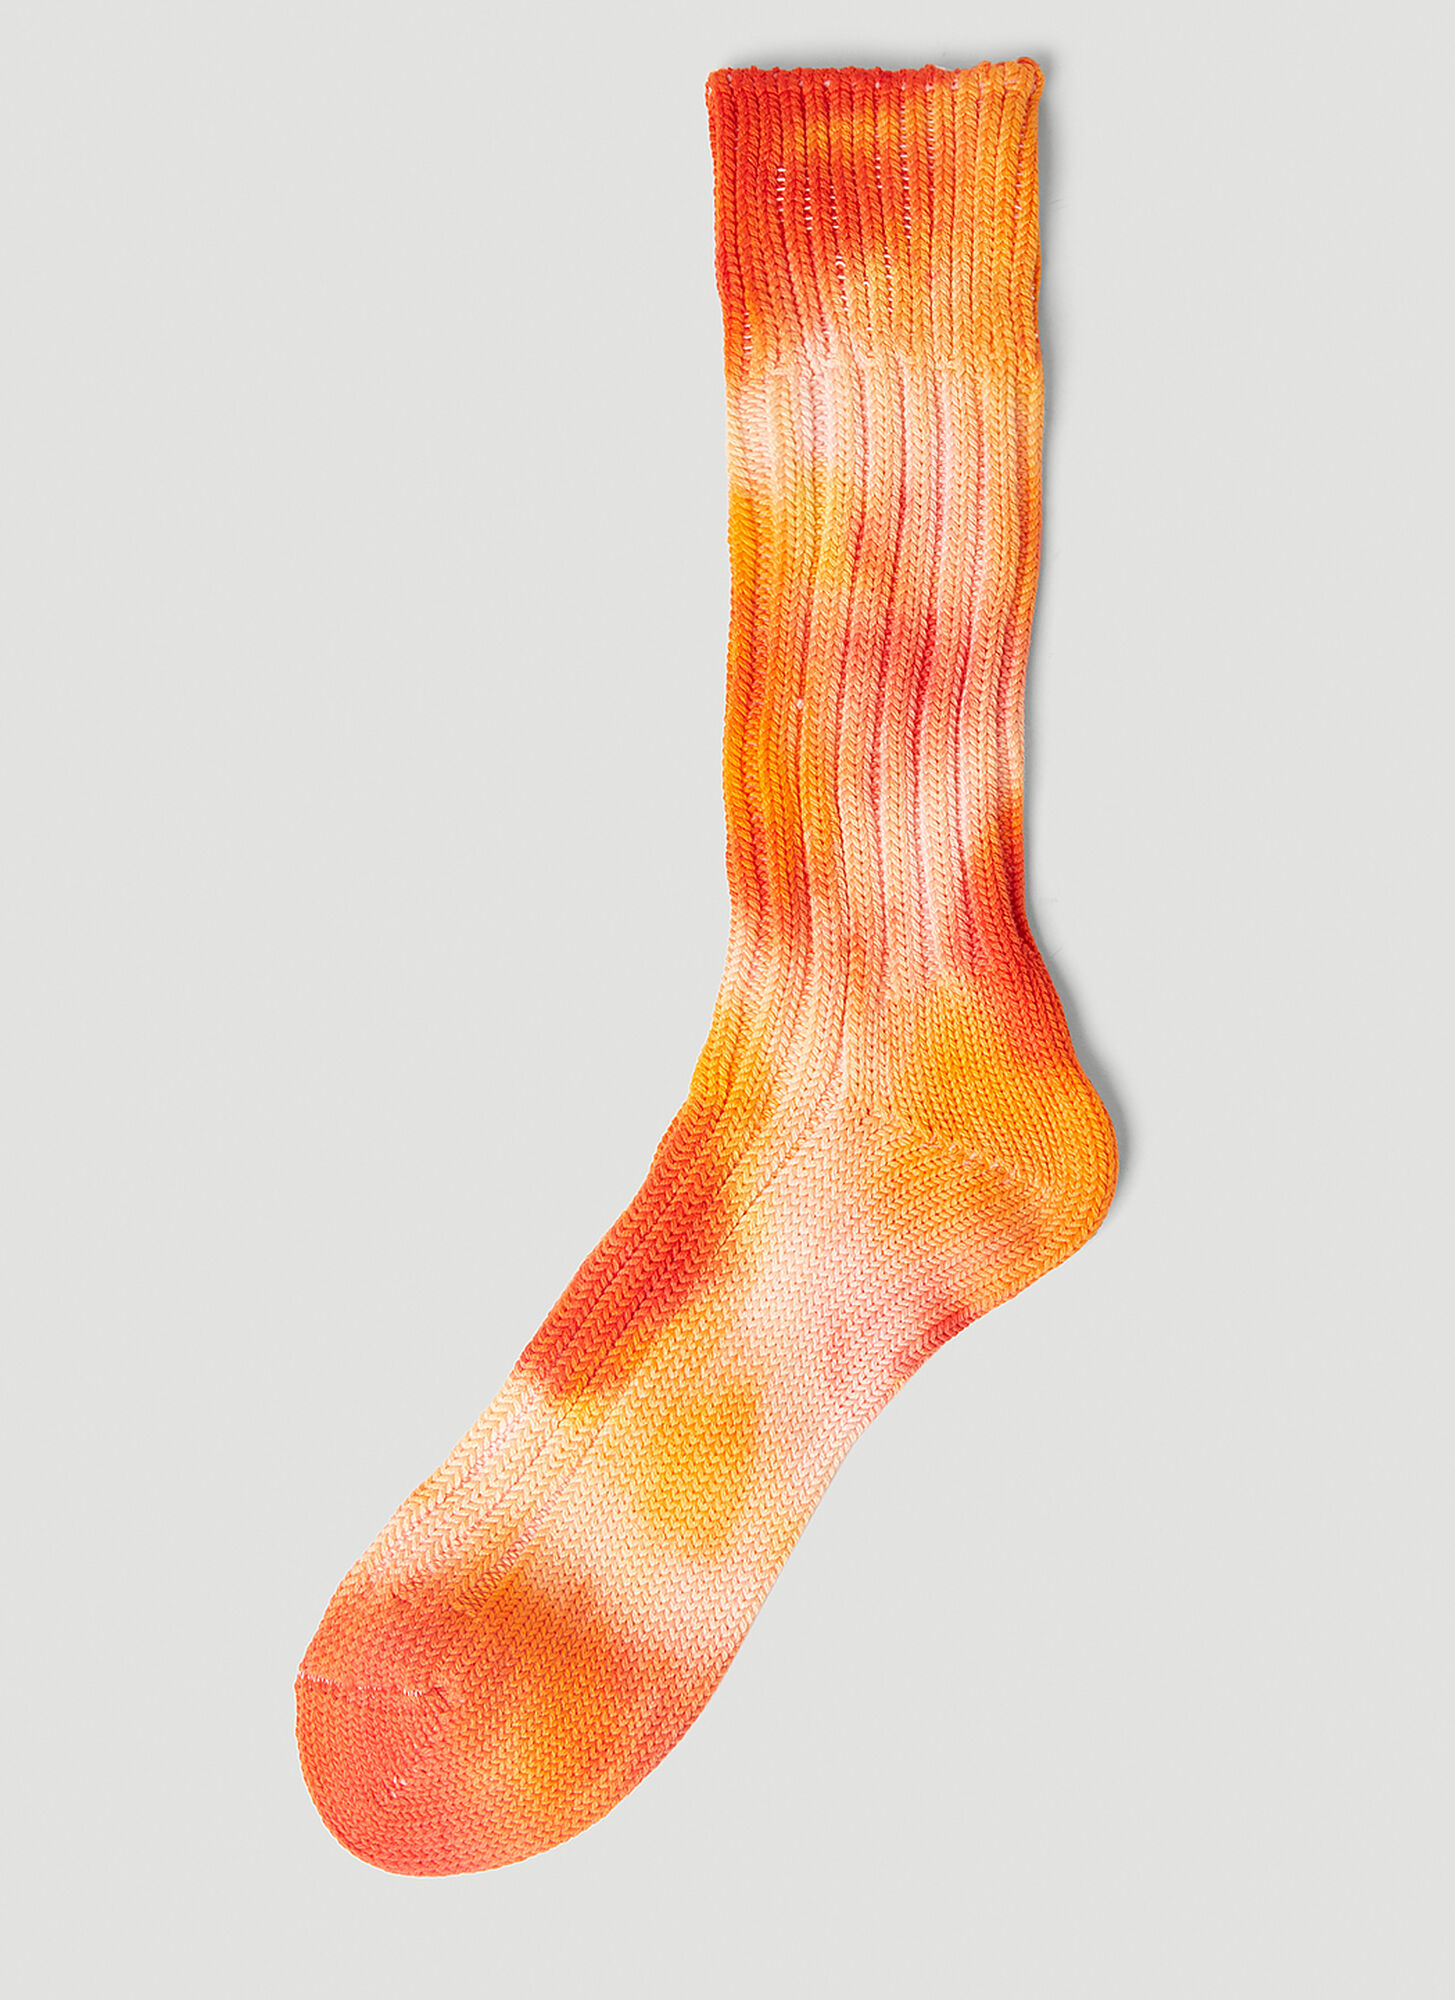 Stain Shade X Decka Socks Tie Dye Socks In Orange